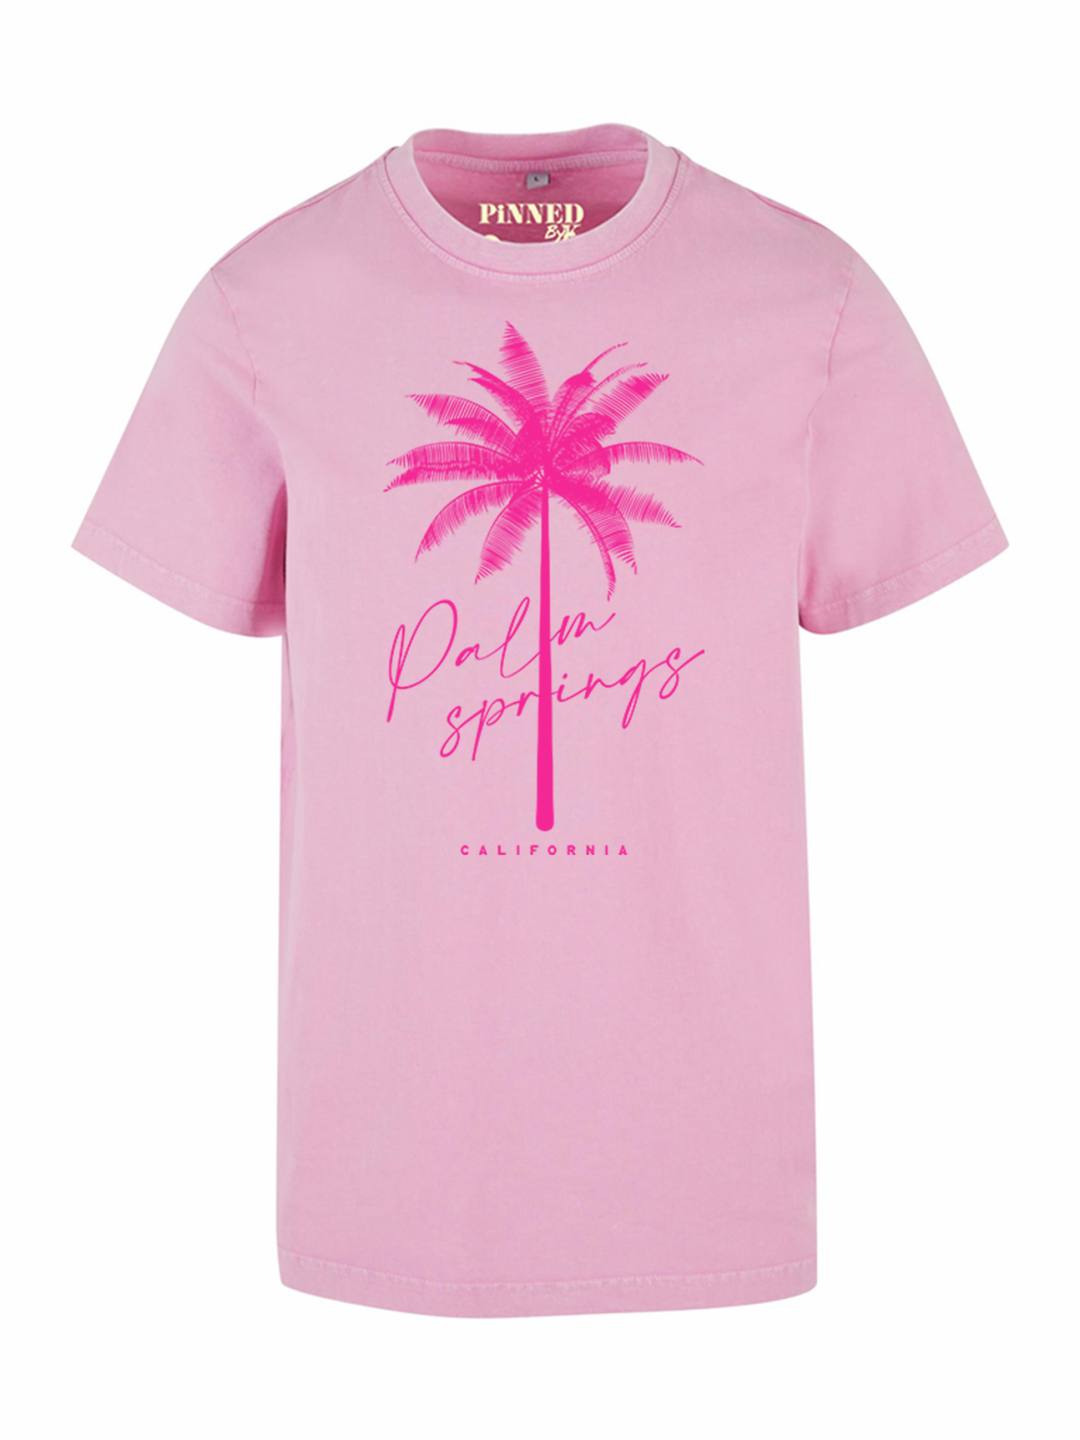 Palm springs pink